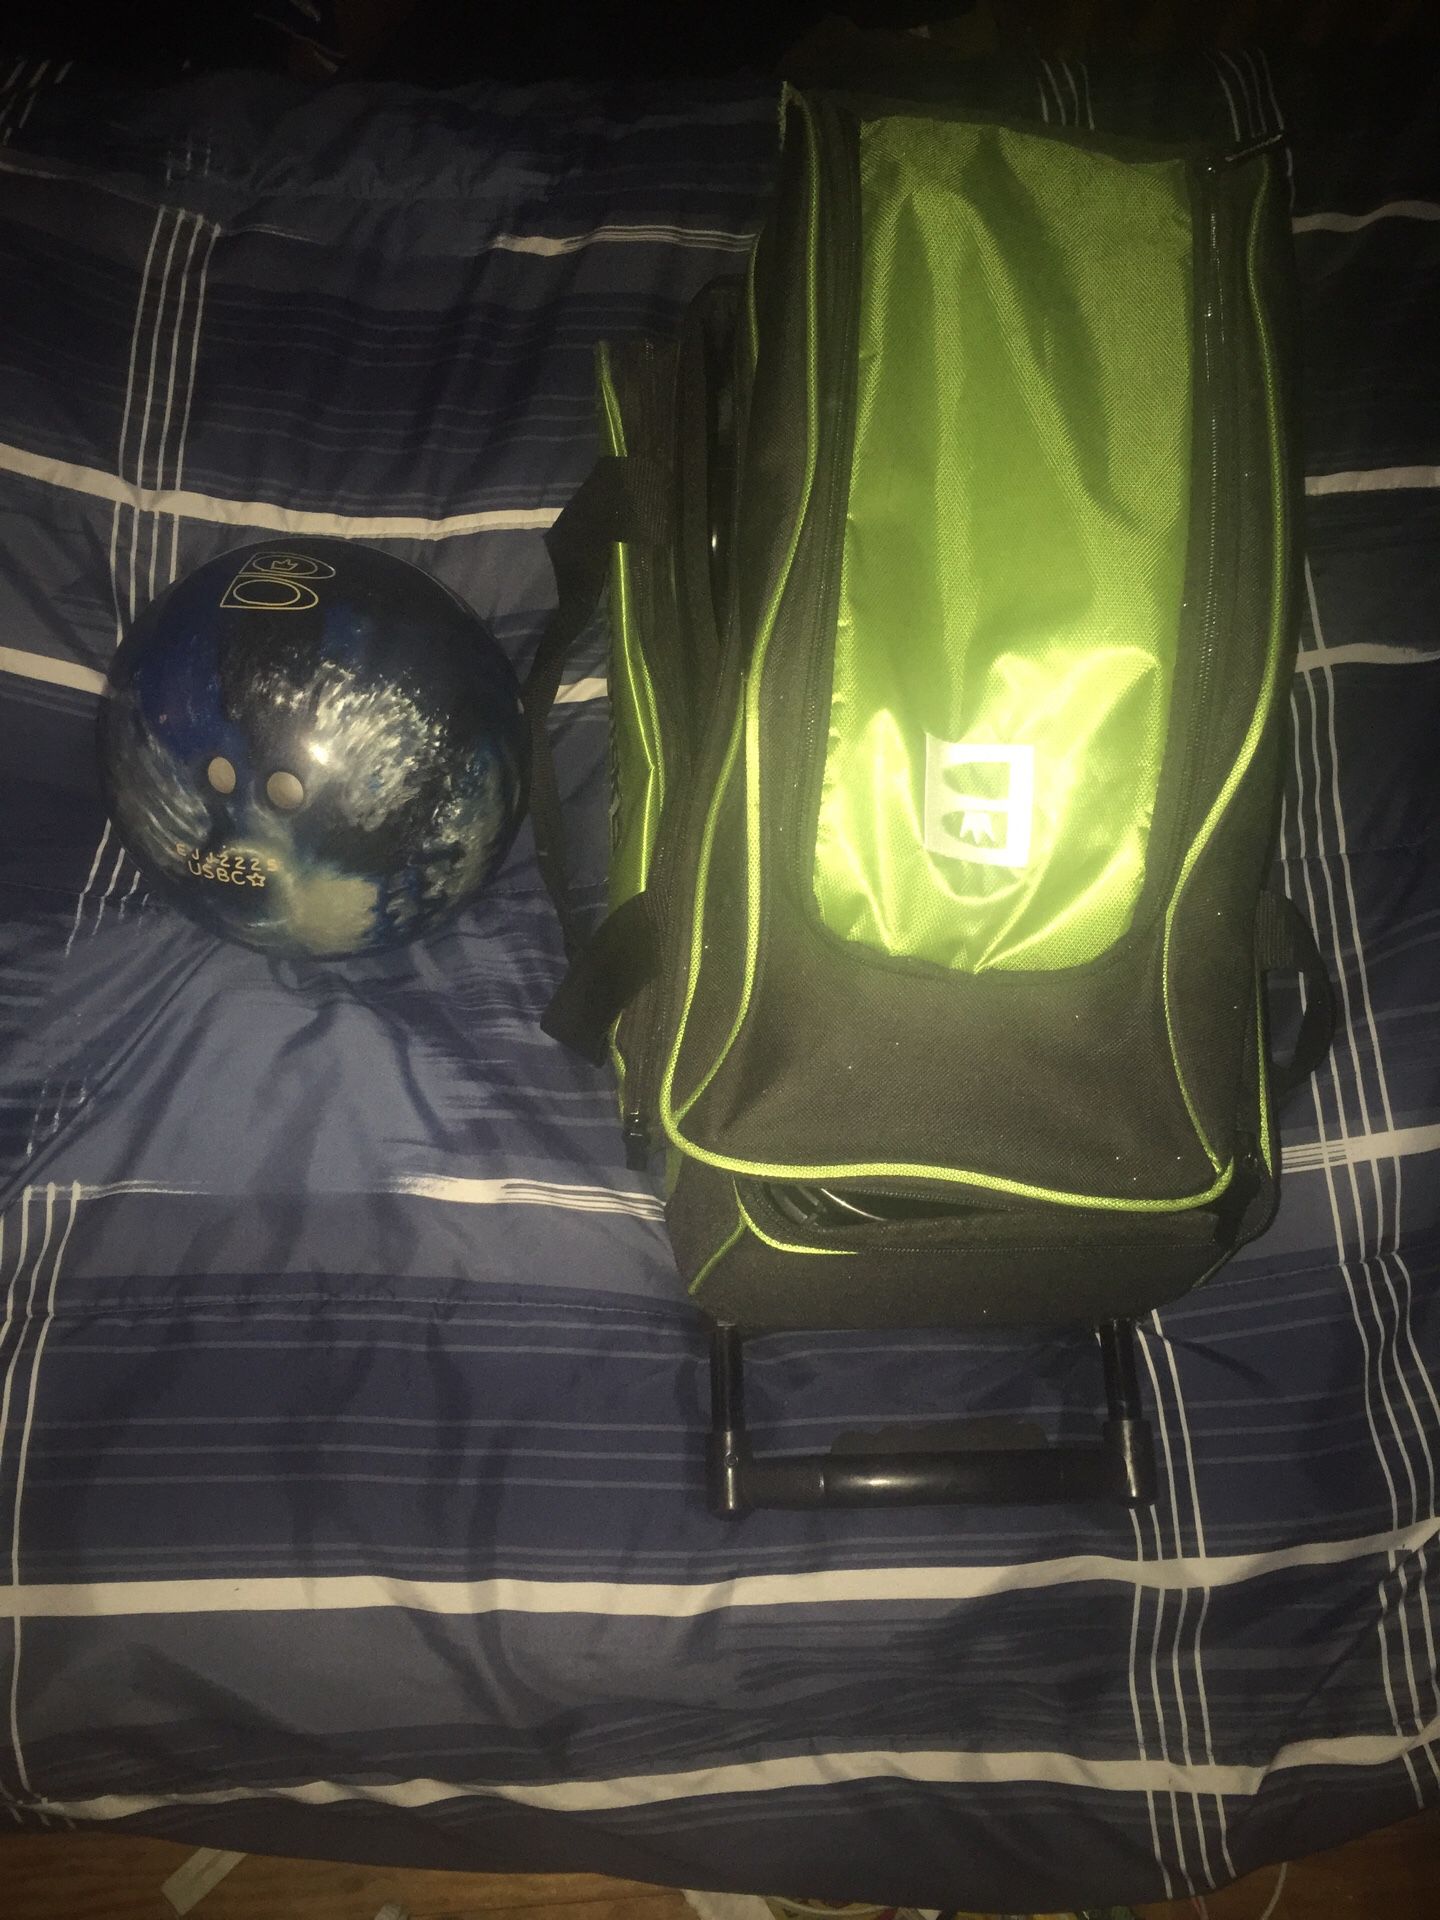 Brunswick 14 lb bowling ball and 2 ball rolling ball bag with shoe storage